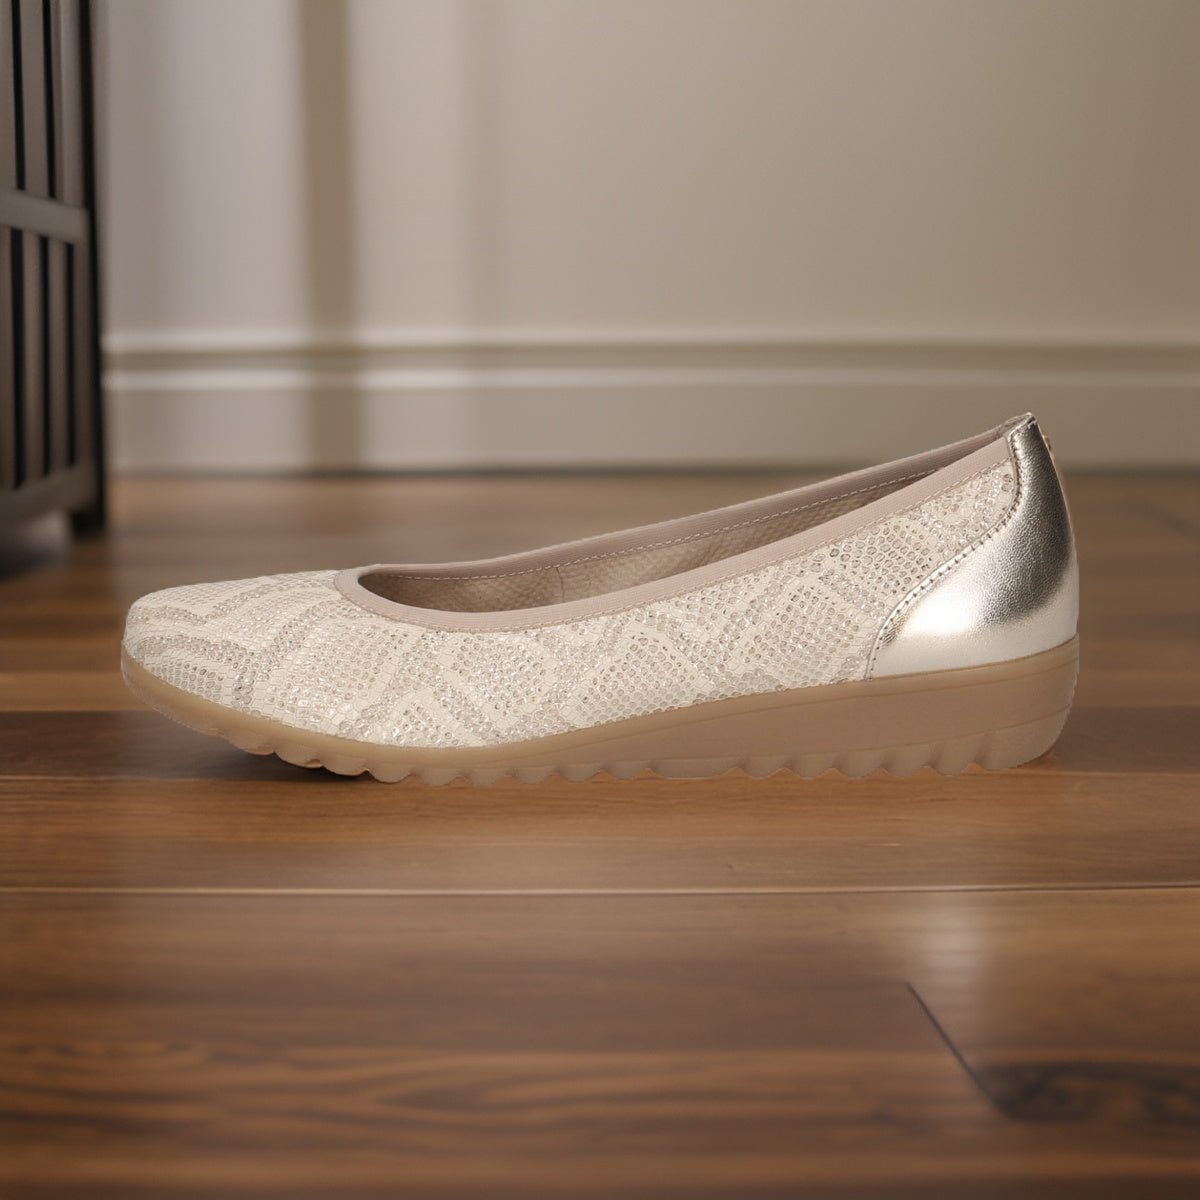 Caprice Light Gold Loafer-Pump Hybrid - Women's Comfort Shoes